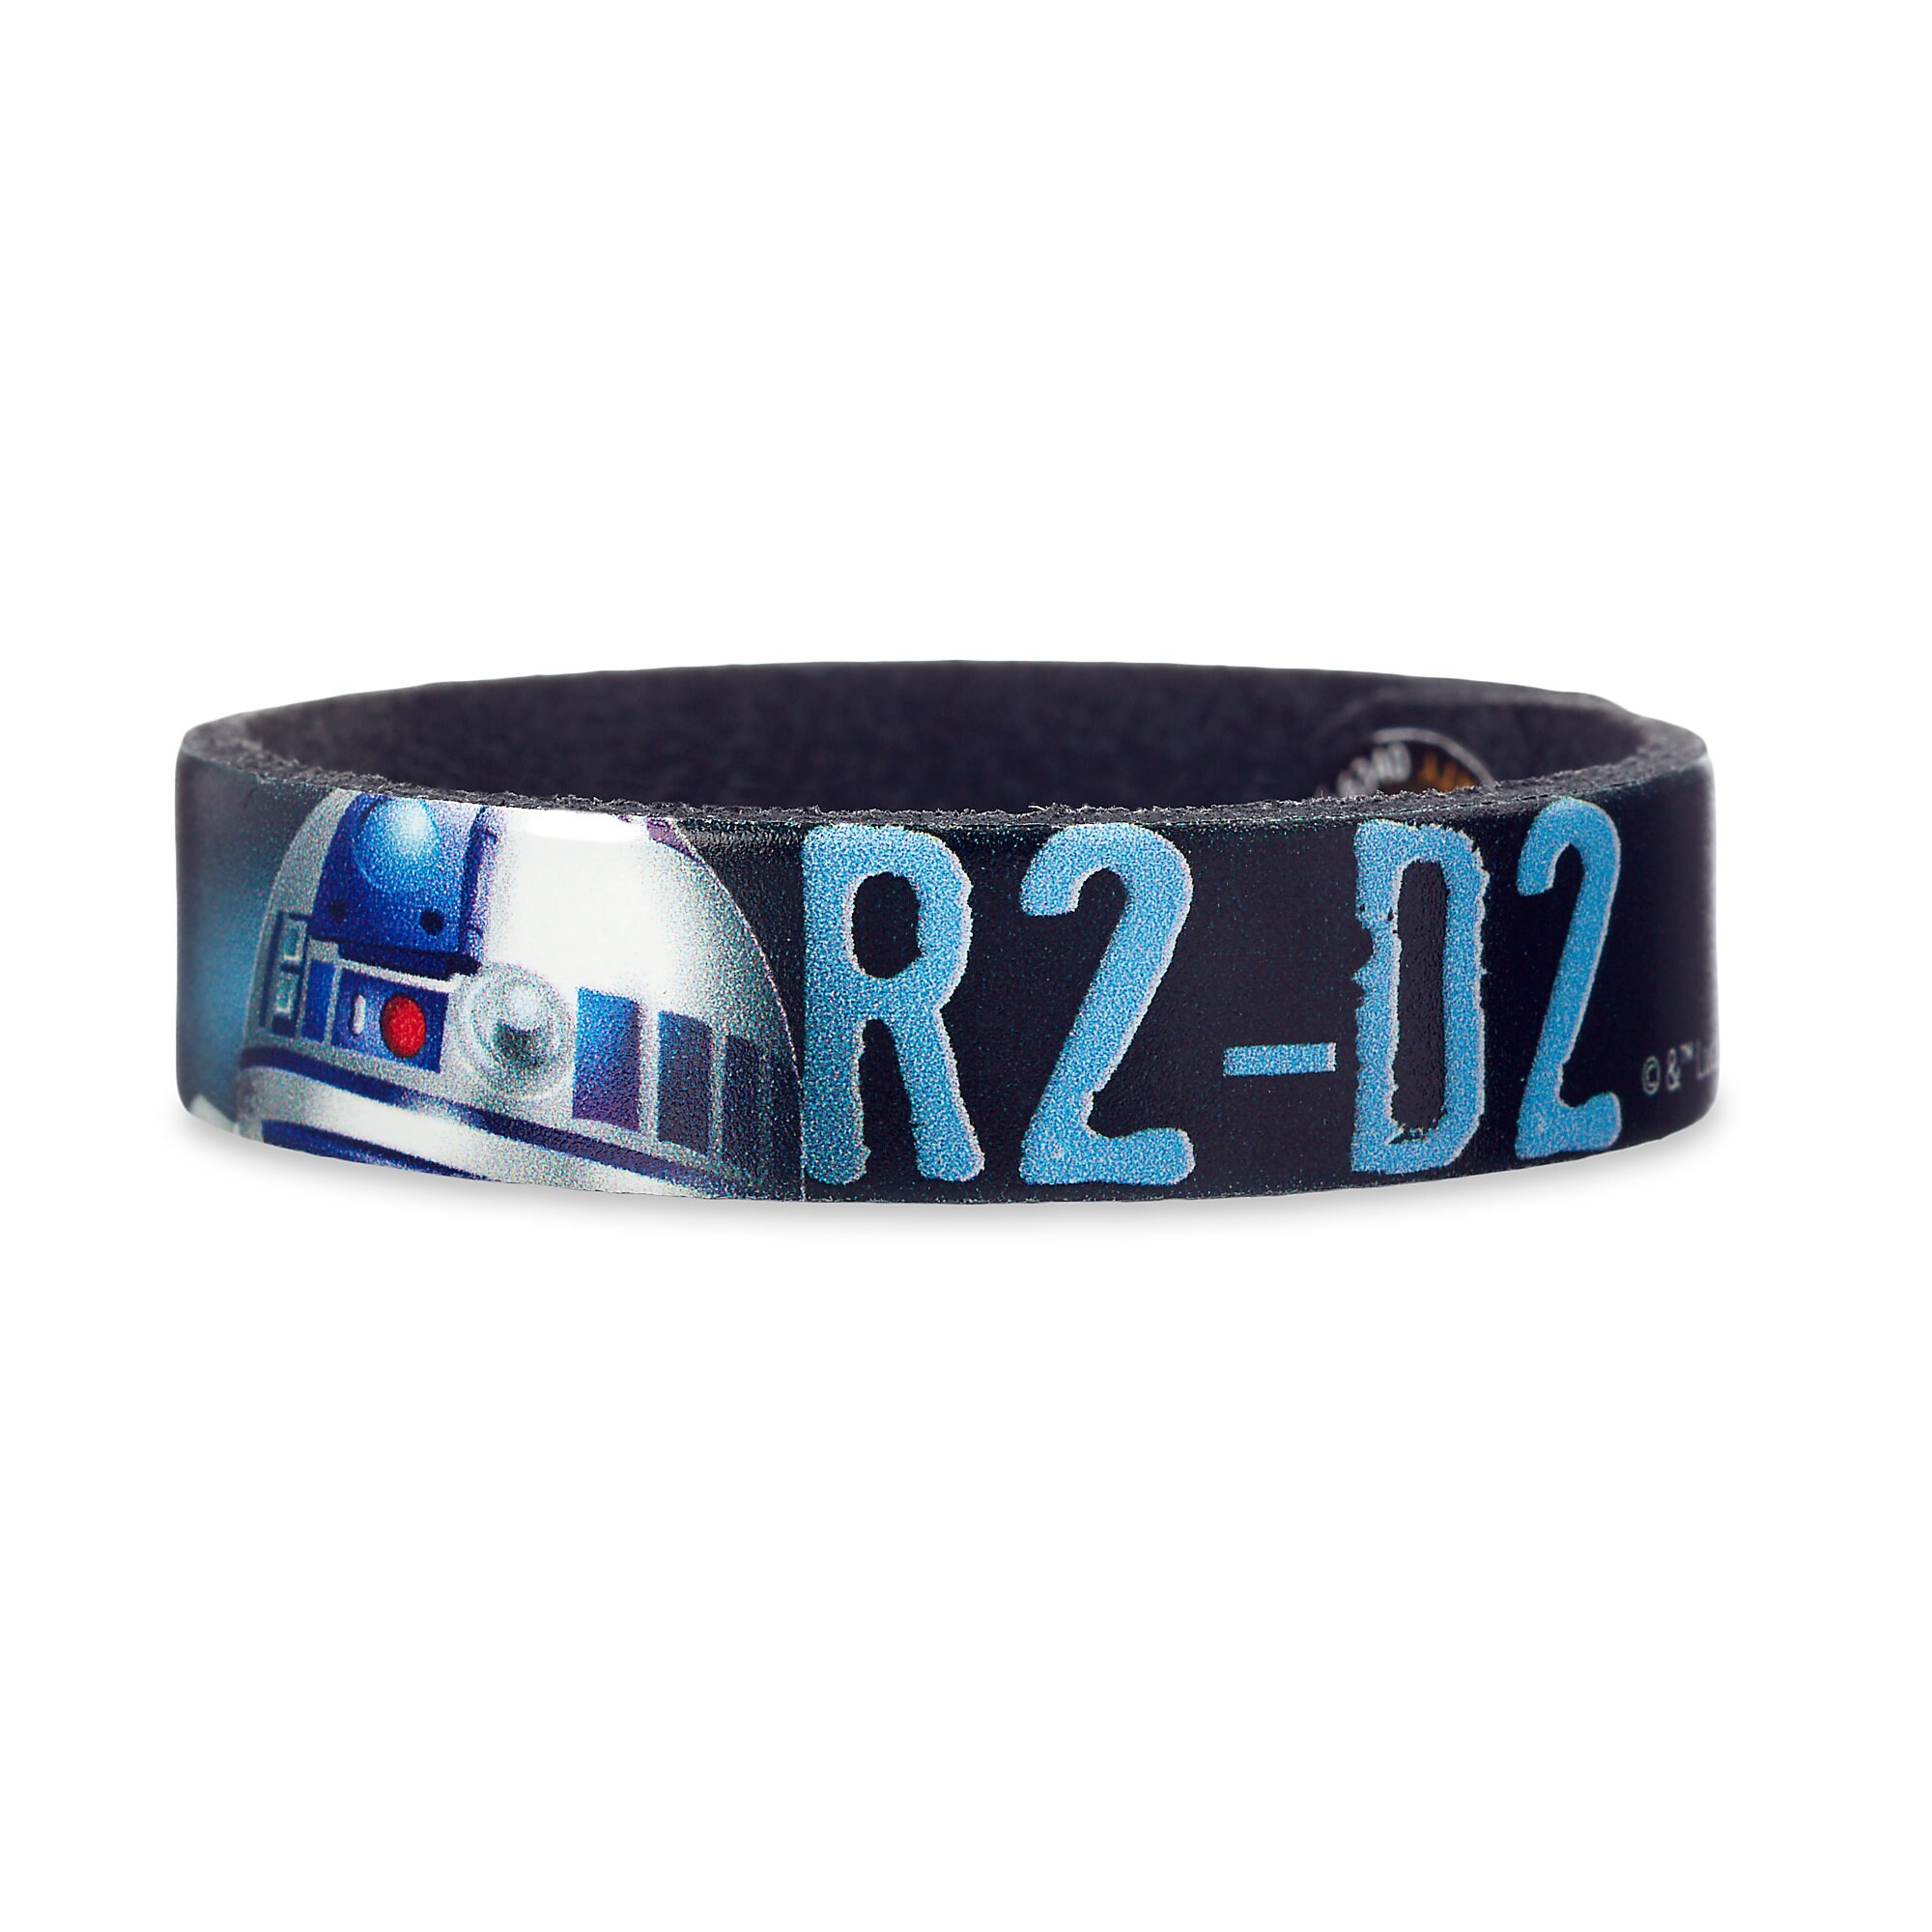 R2-D2 Leather Bracelet - Star Wars - Personalizable